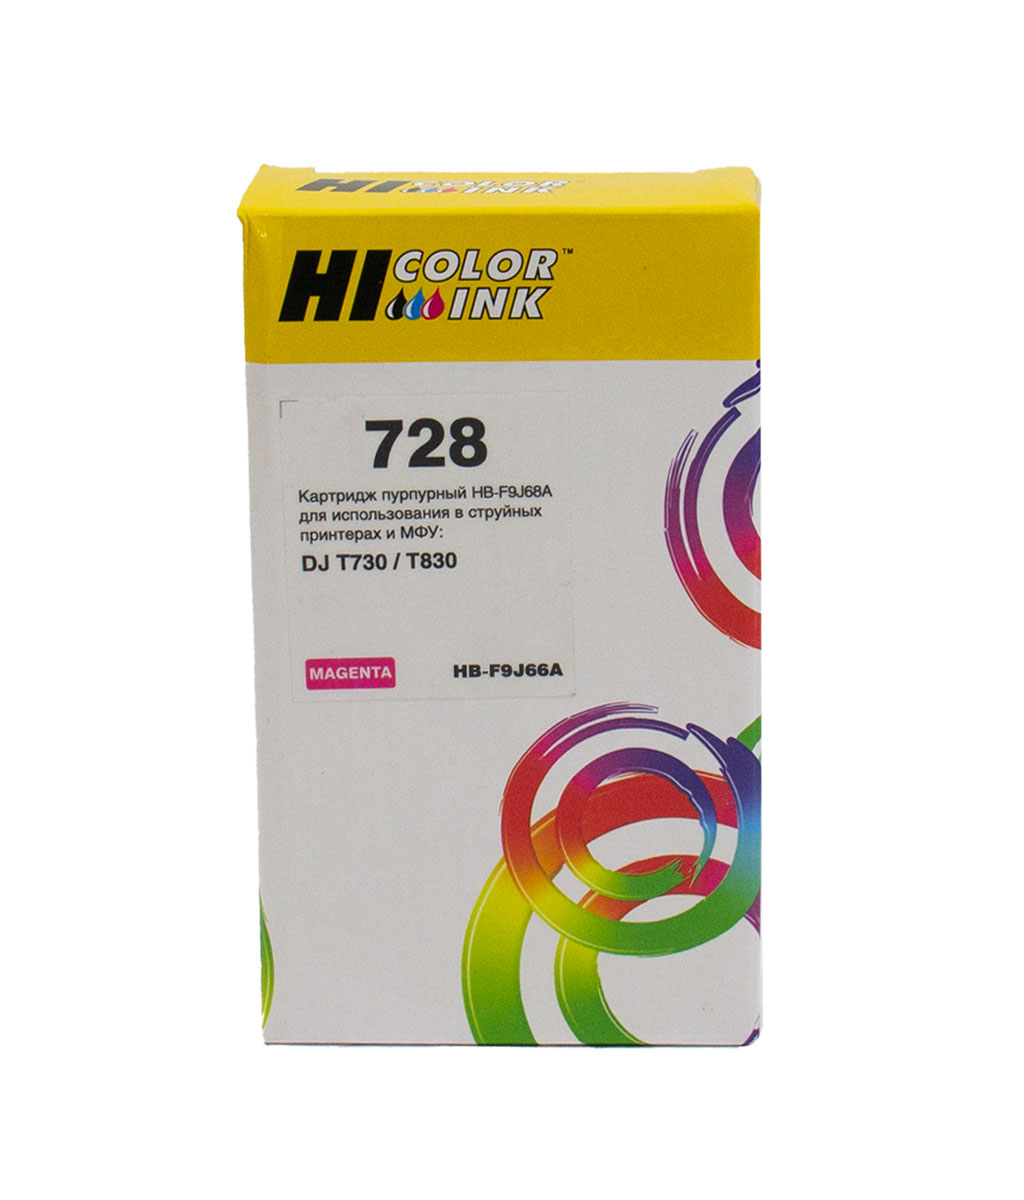 Картридж Hi-Black (HB-F9J66A) для HP DesignJet T730/ T830, №728, пурпурный